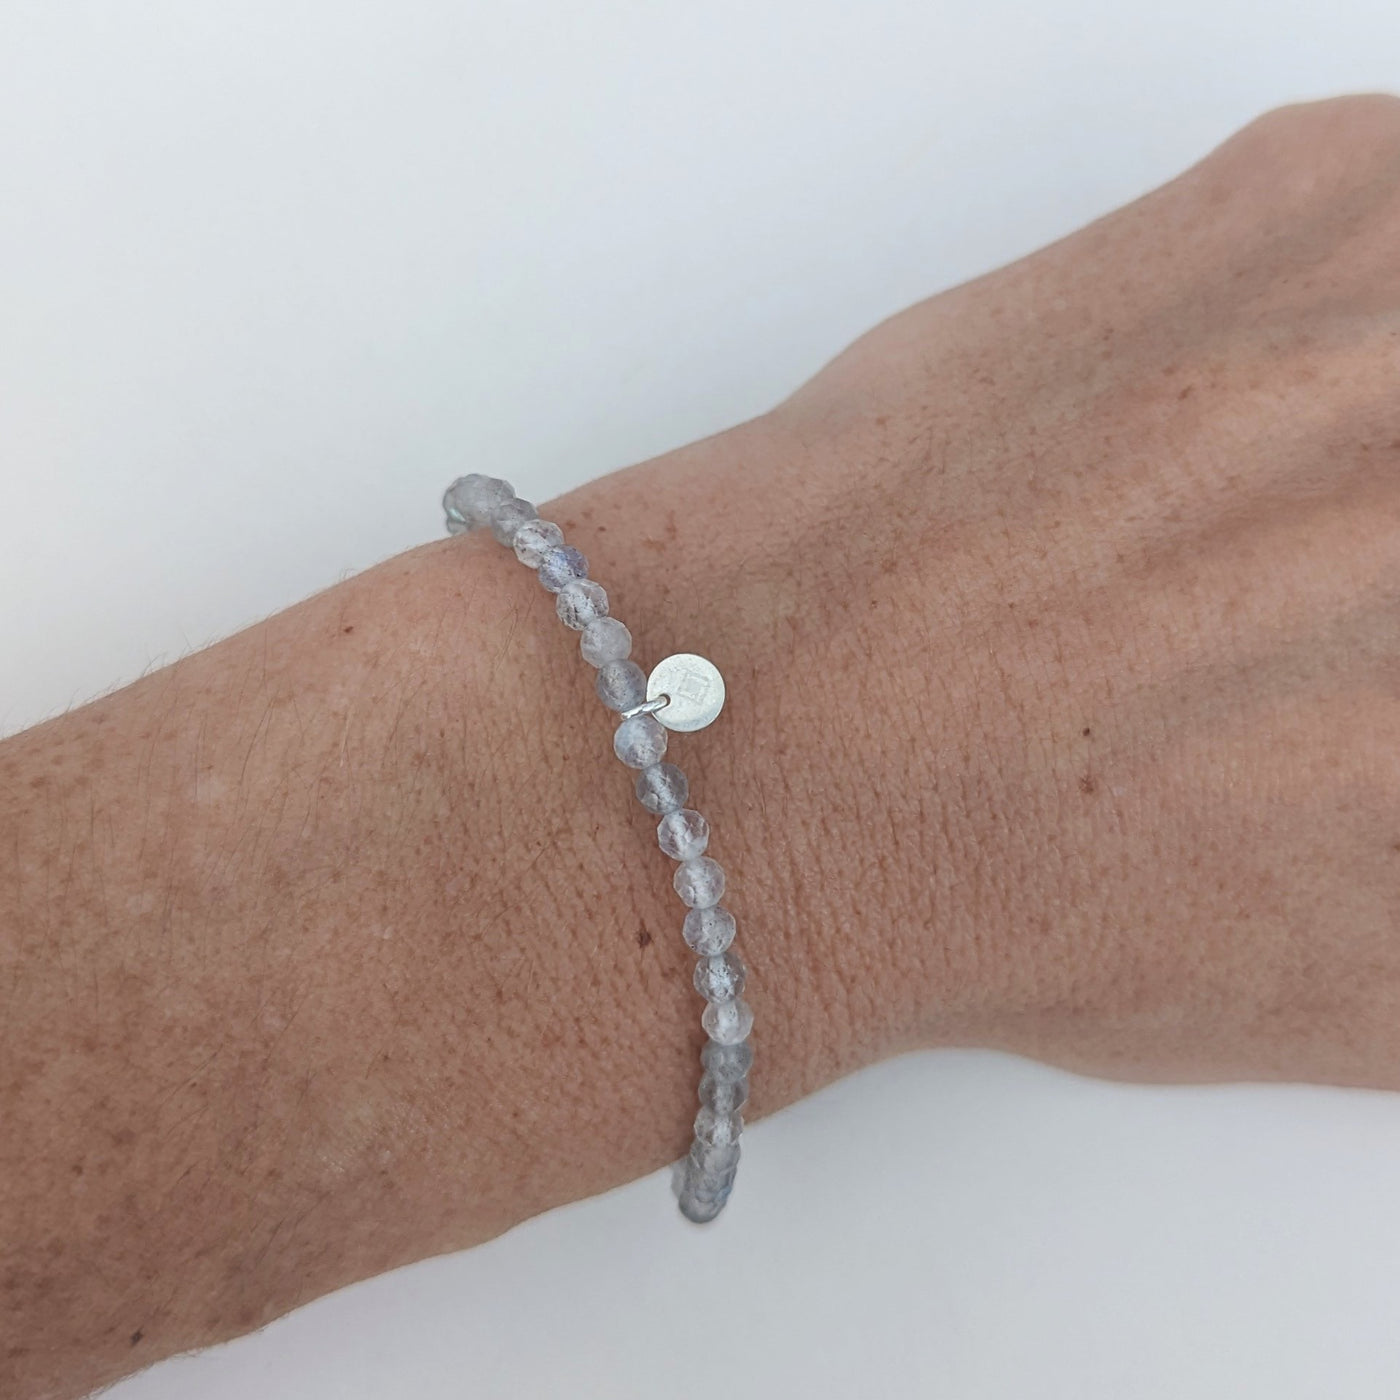 Labradorite gemstone bracelet 4mm faceted beads with sterling silver logo disc